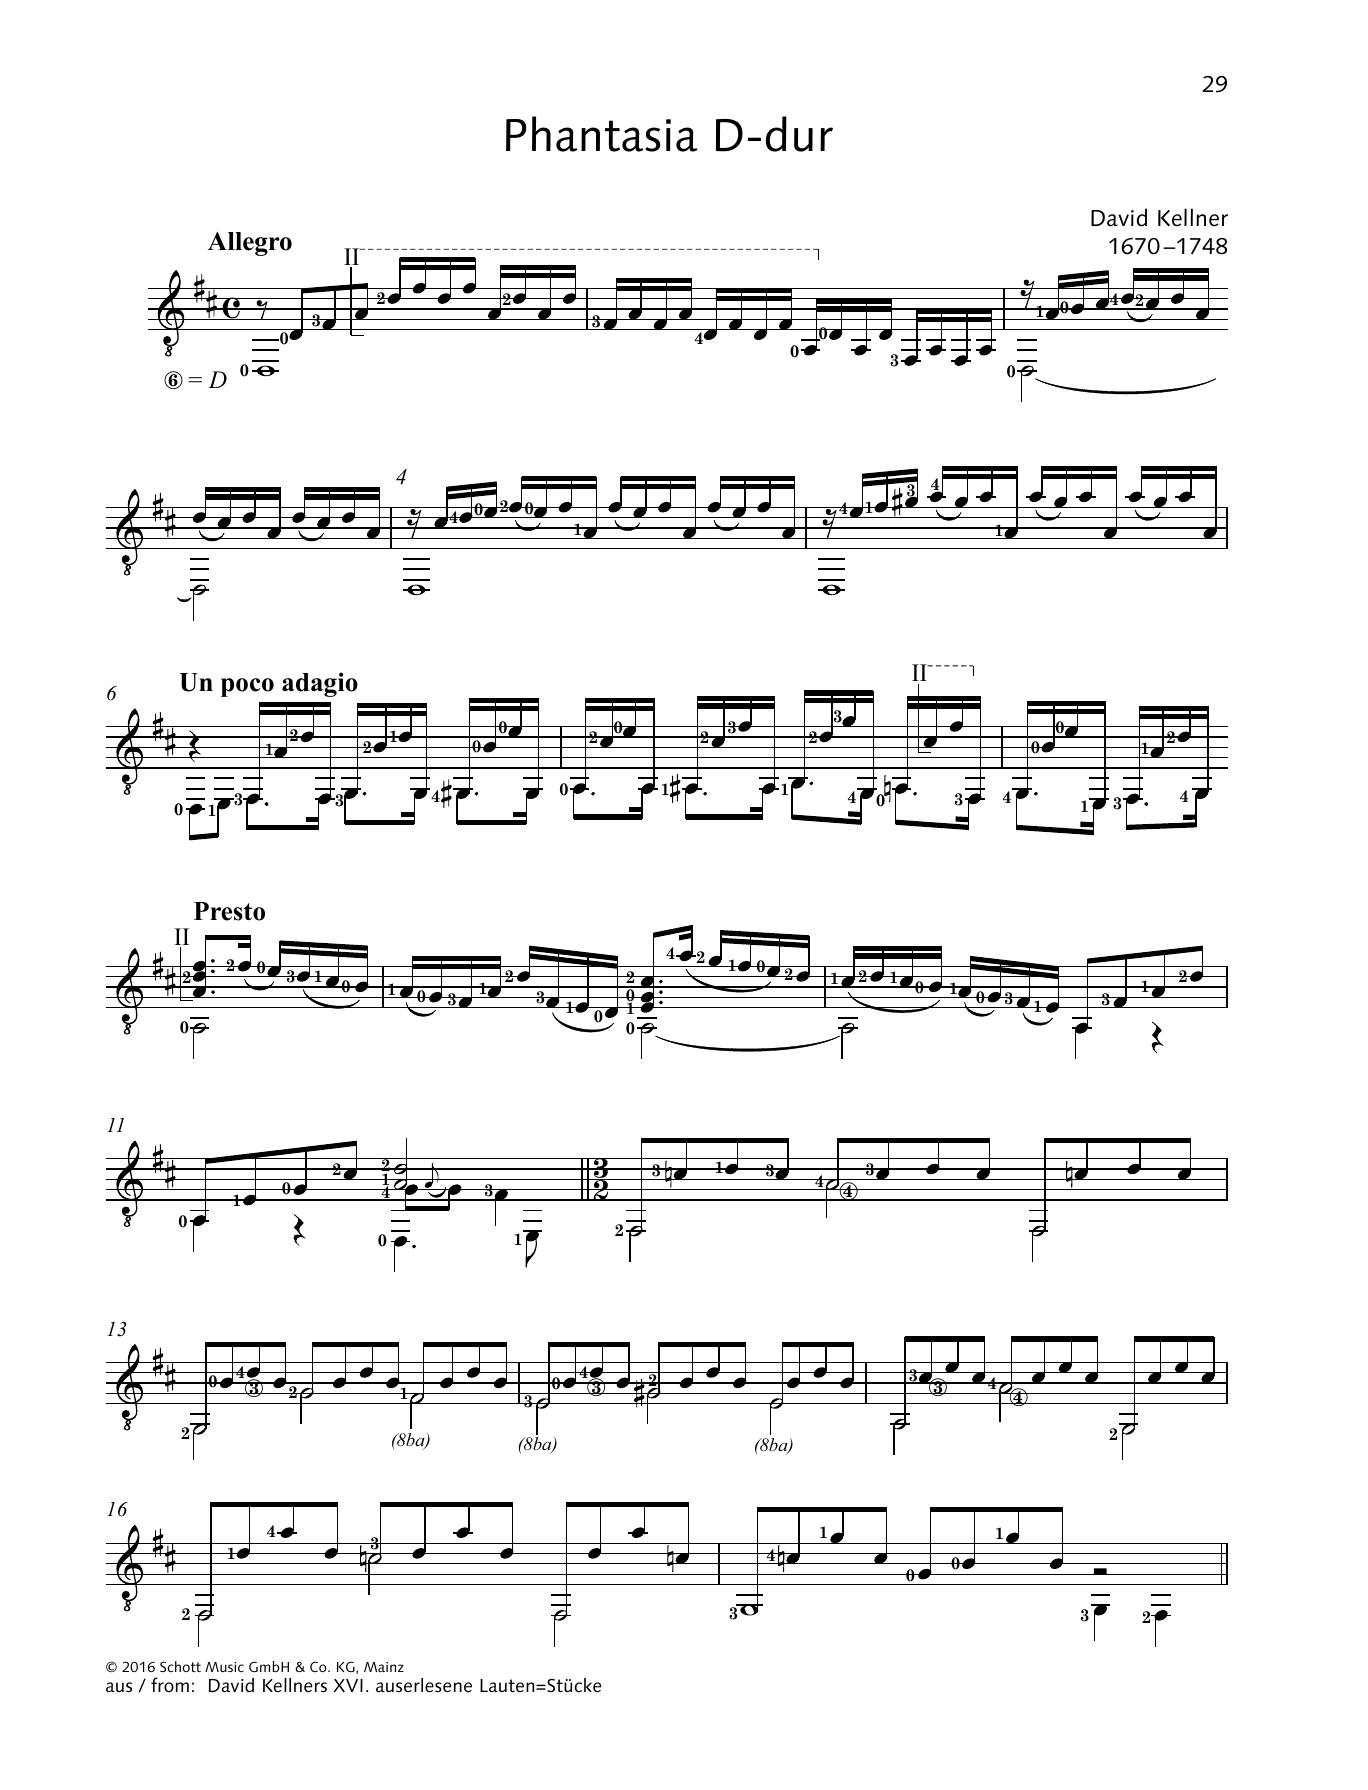 David Kellner Phantasia D-Dur Sheet Music Notes & Chords for Solo Guitar - Download or Print PDF